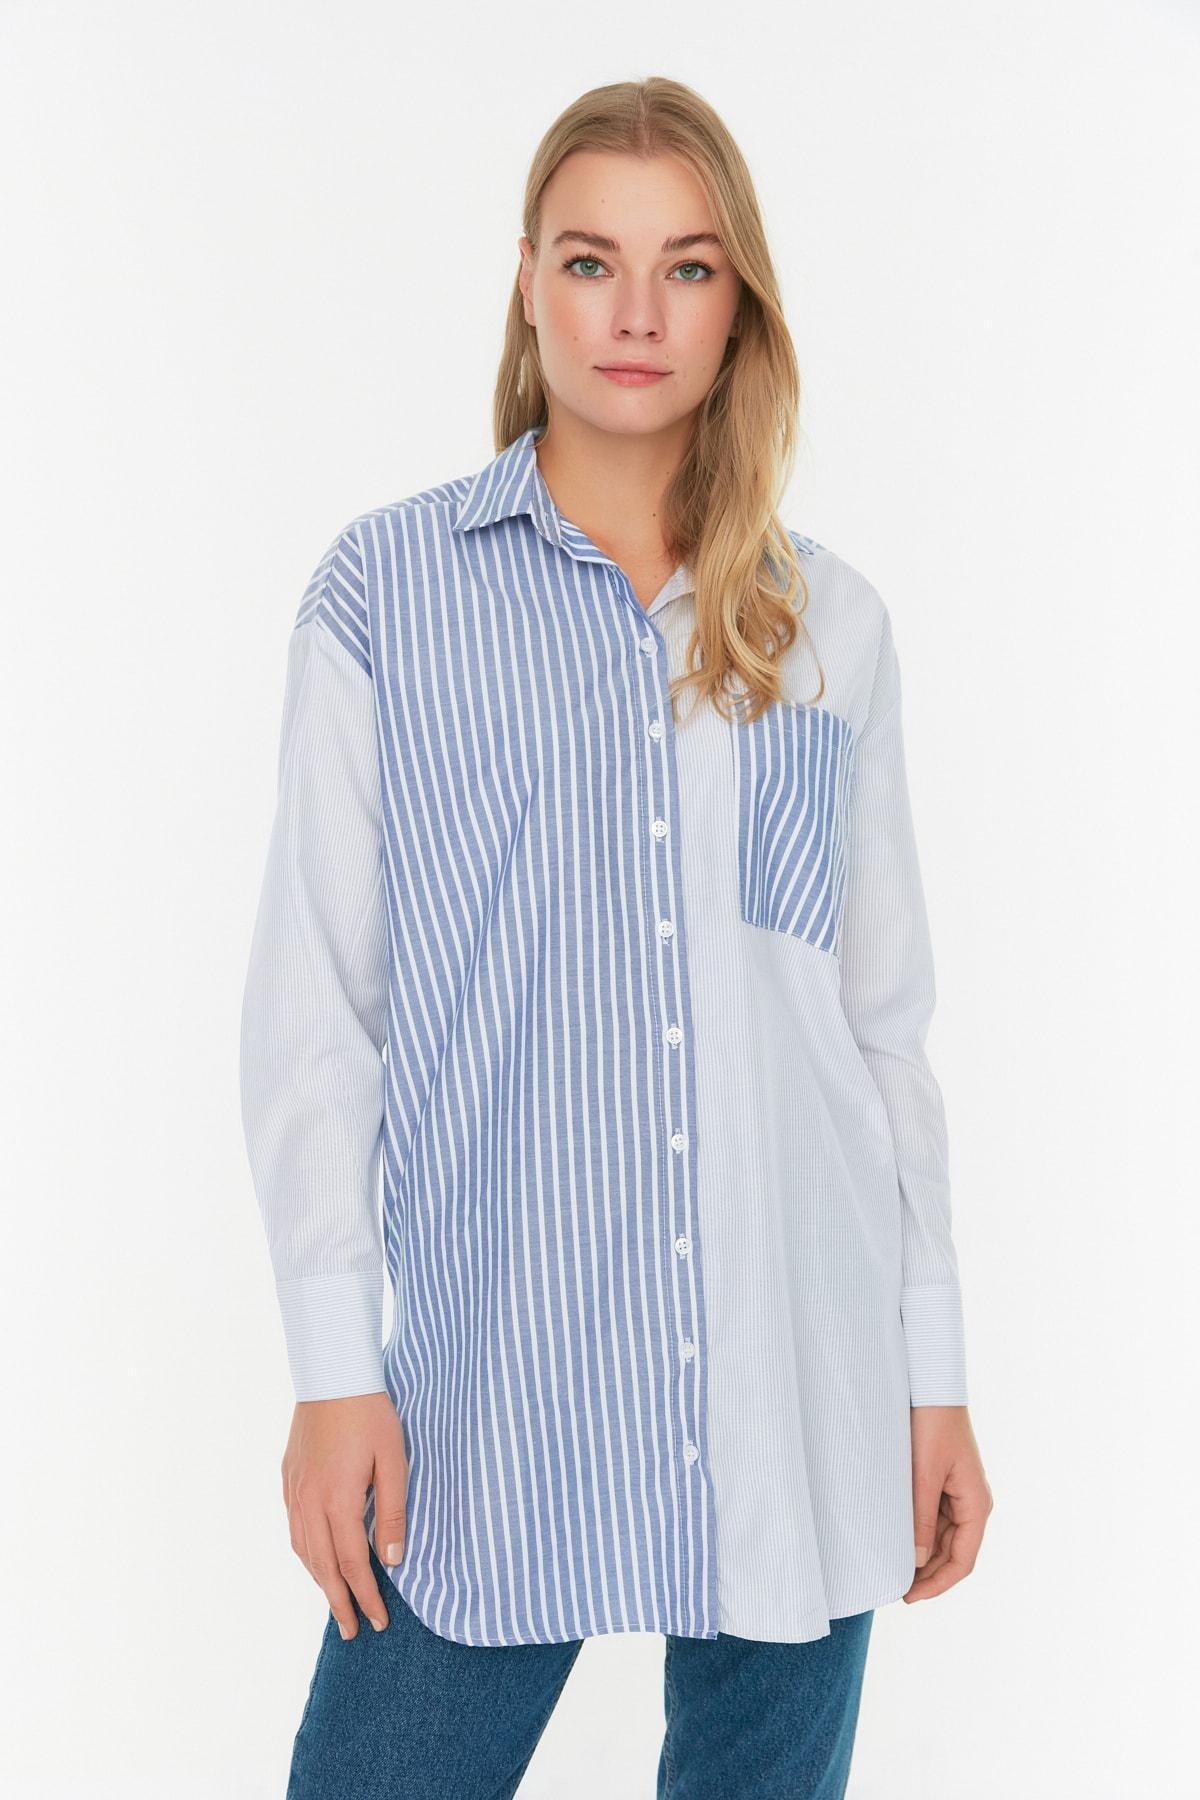 Trendyol - Blue Striped Cotton Shirt